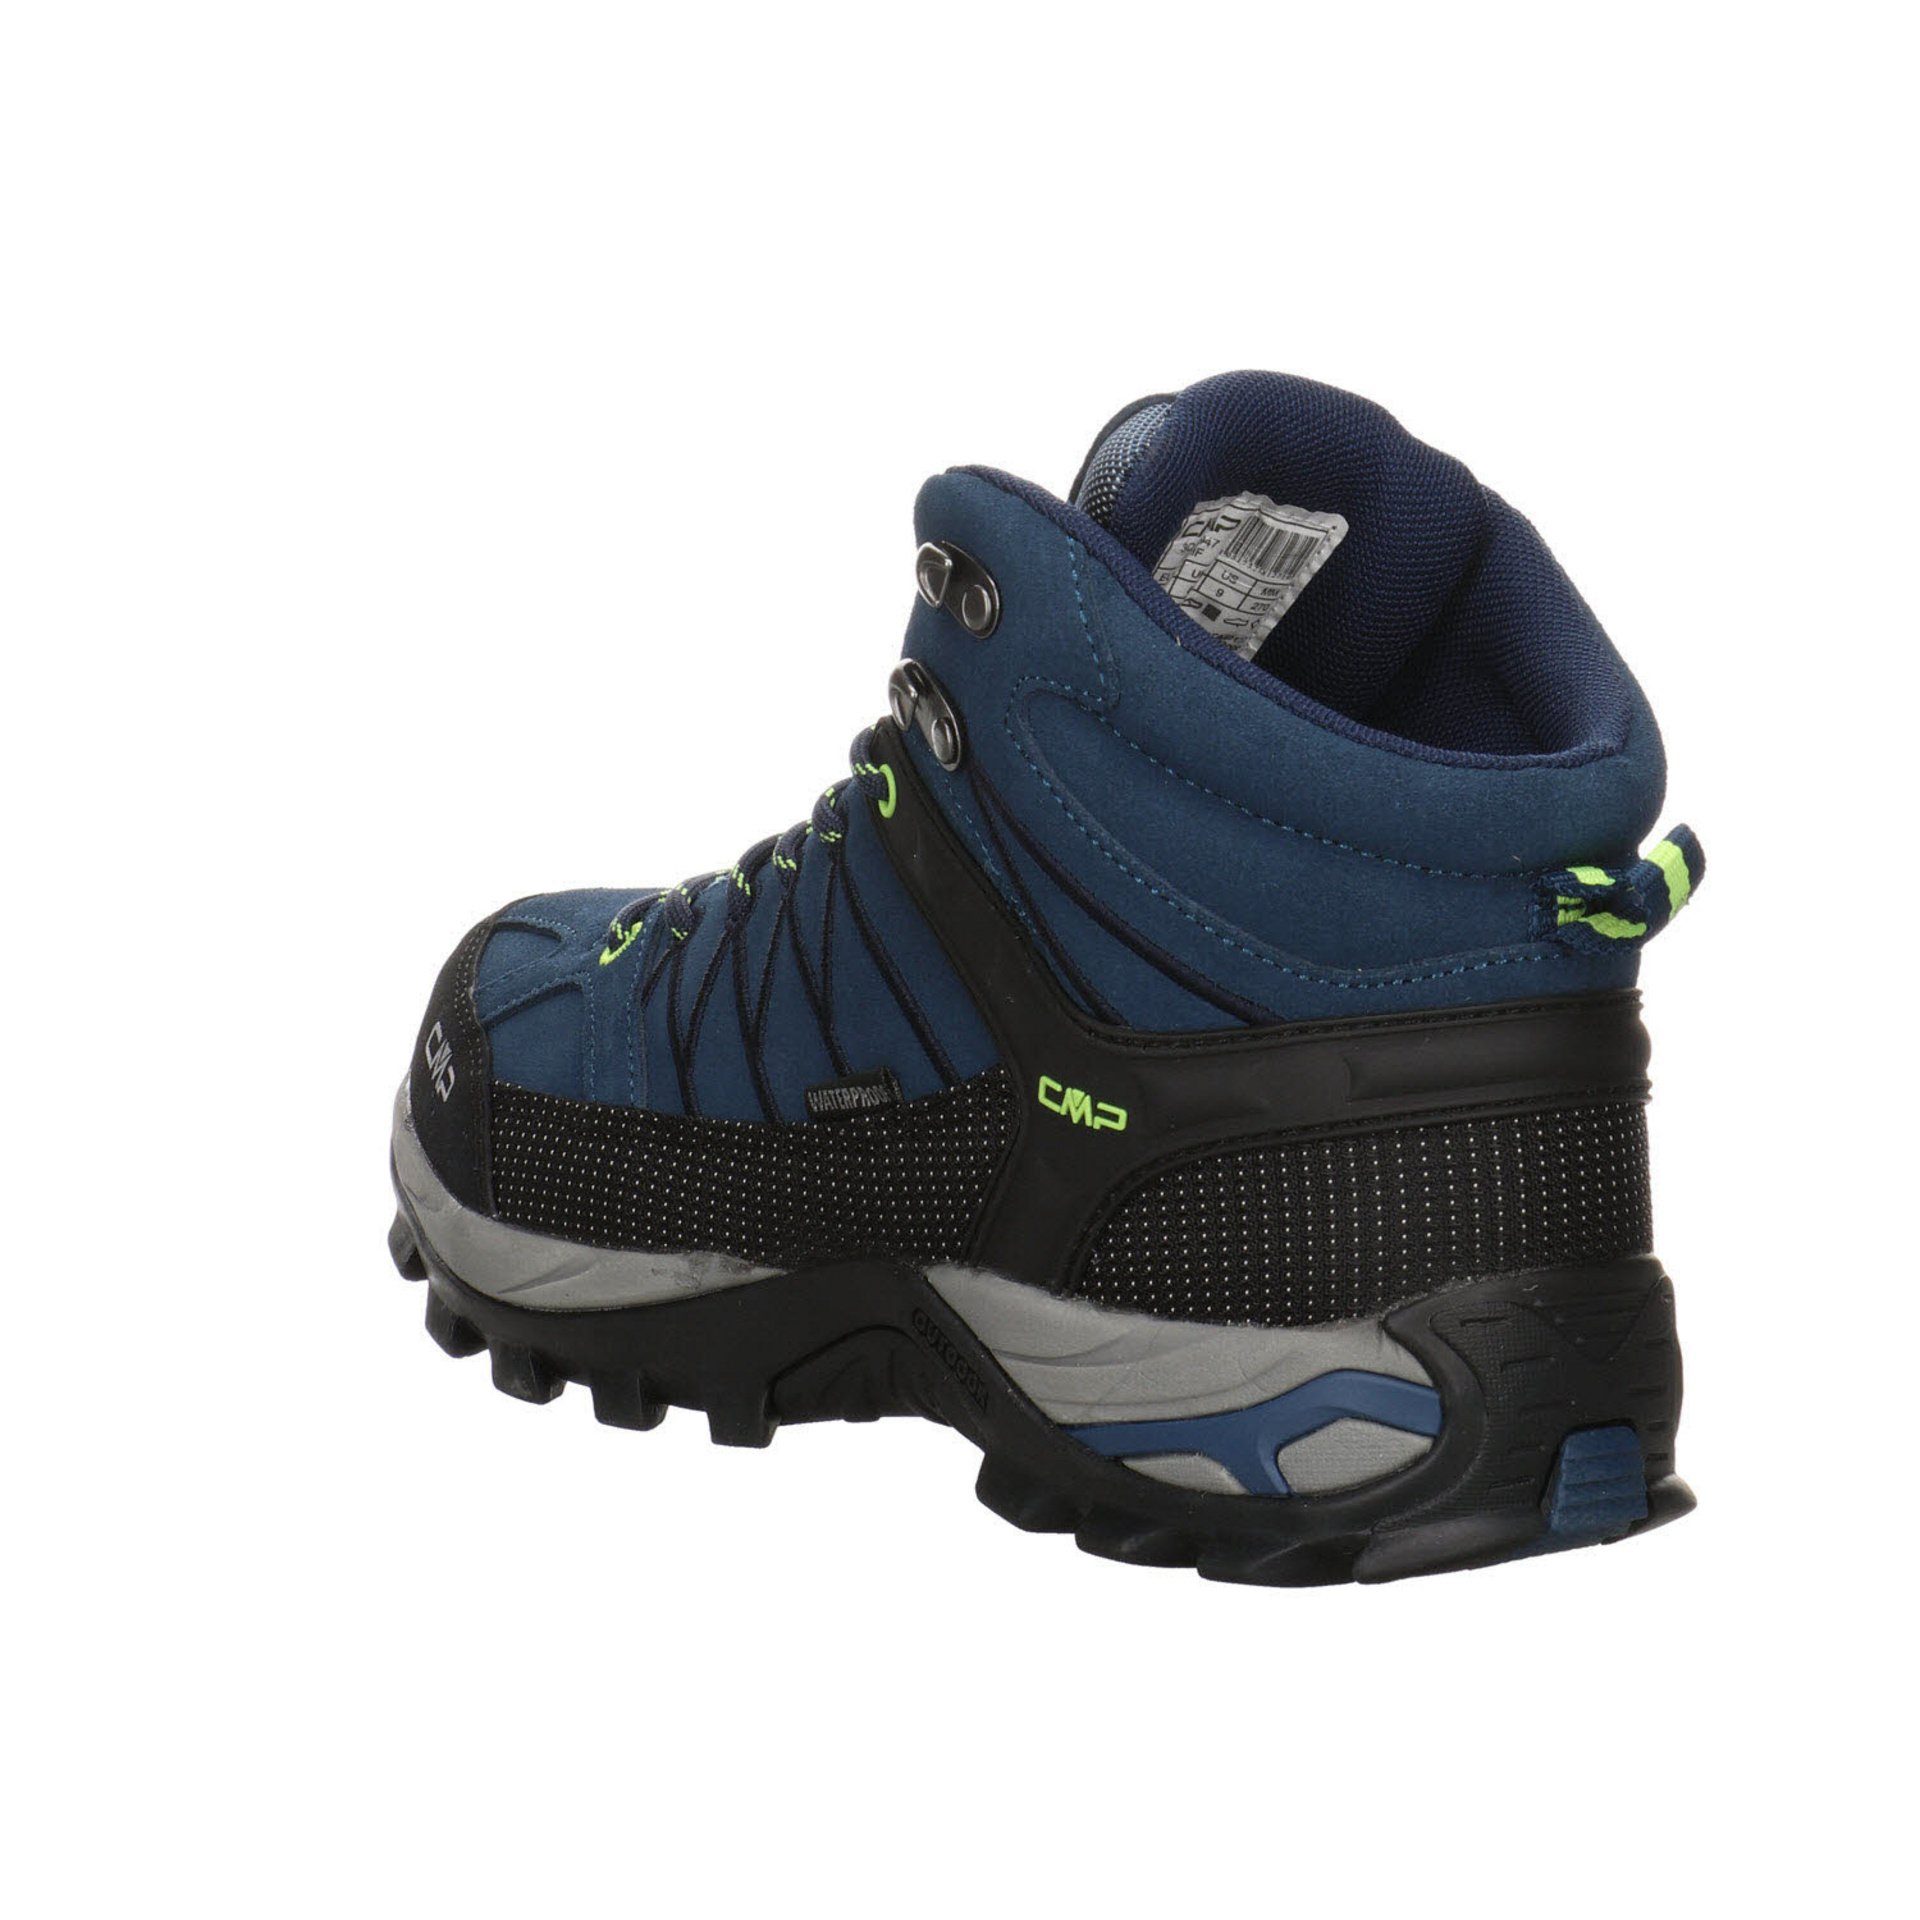 CMP Outdoor FLUO Outdoorschuh INK-YELLOW Herren Schuhe Outdoorschuh Leder-/Textilkombination Mid Rigel BLUE